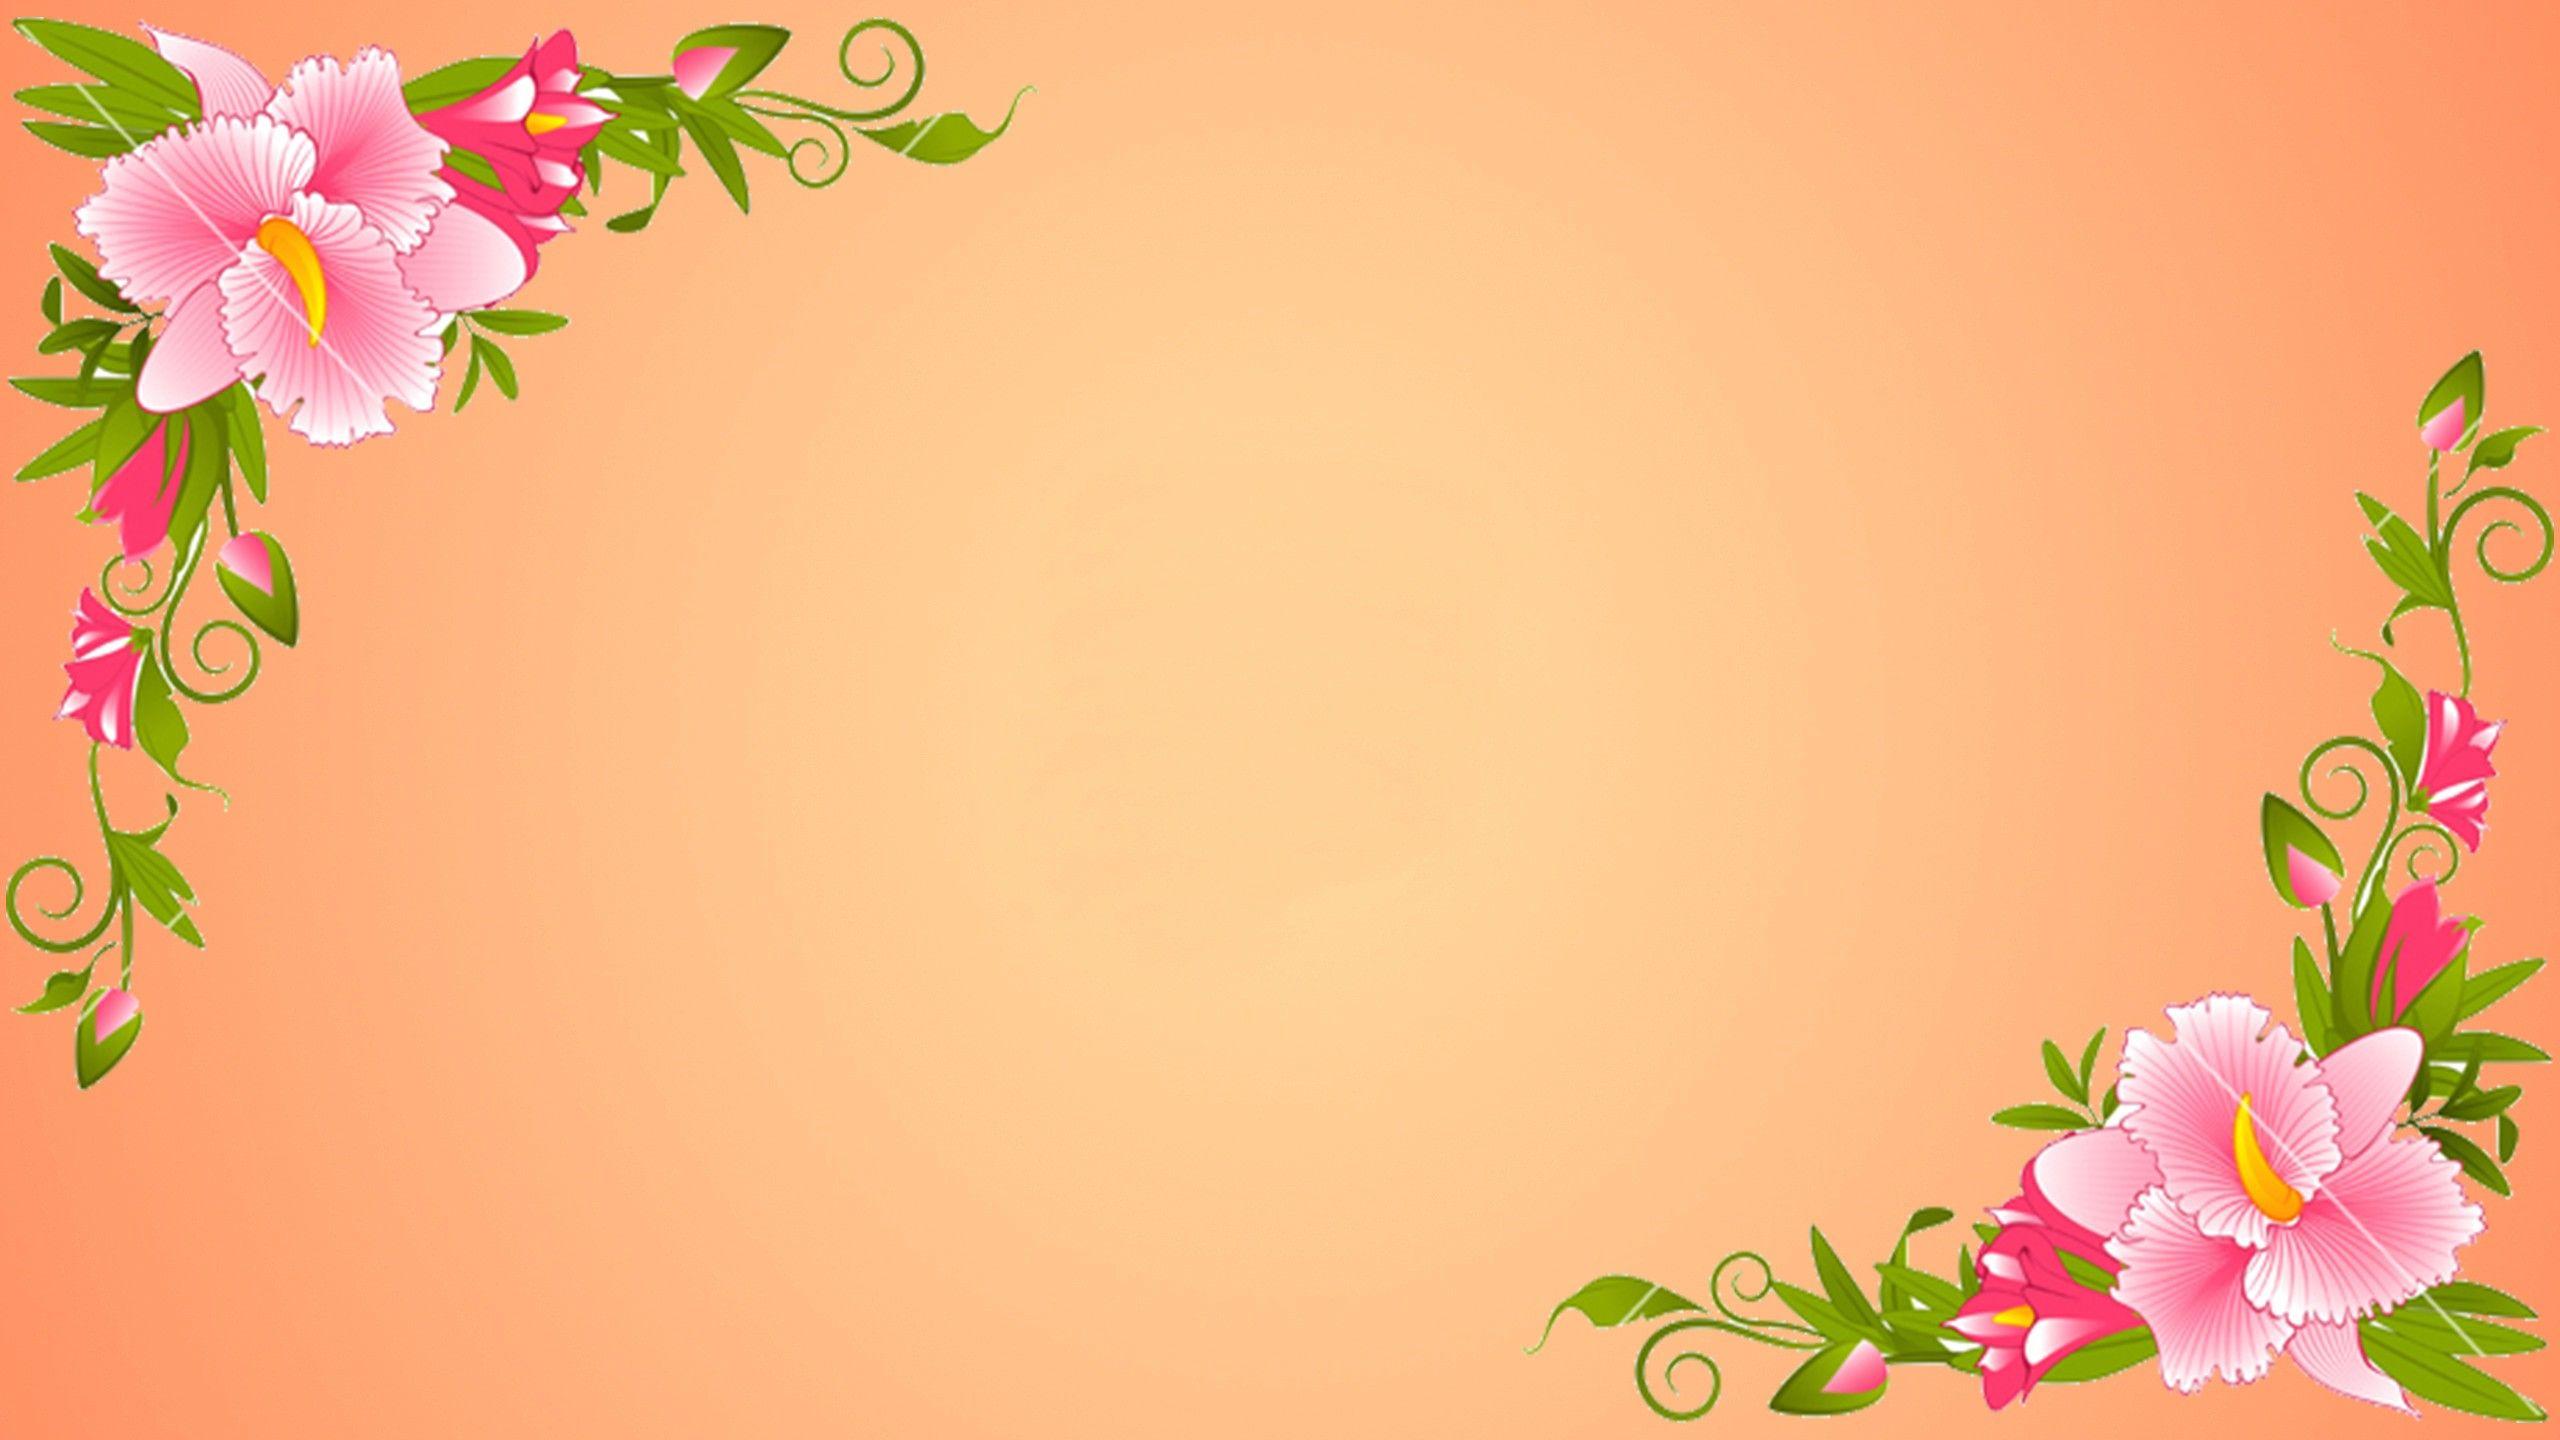 Download Flower Backgrounds HD - Wallpaper Cave